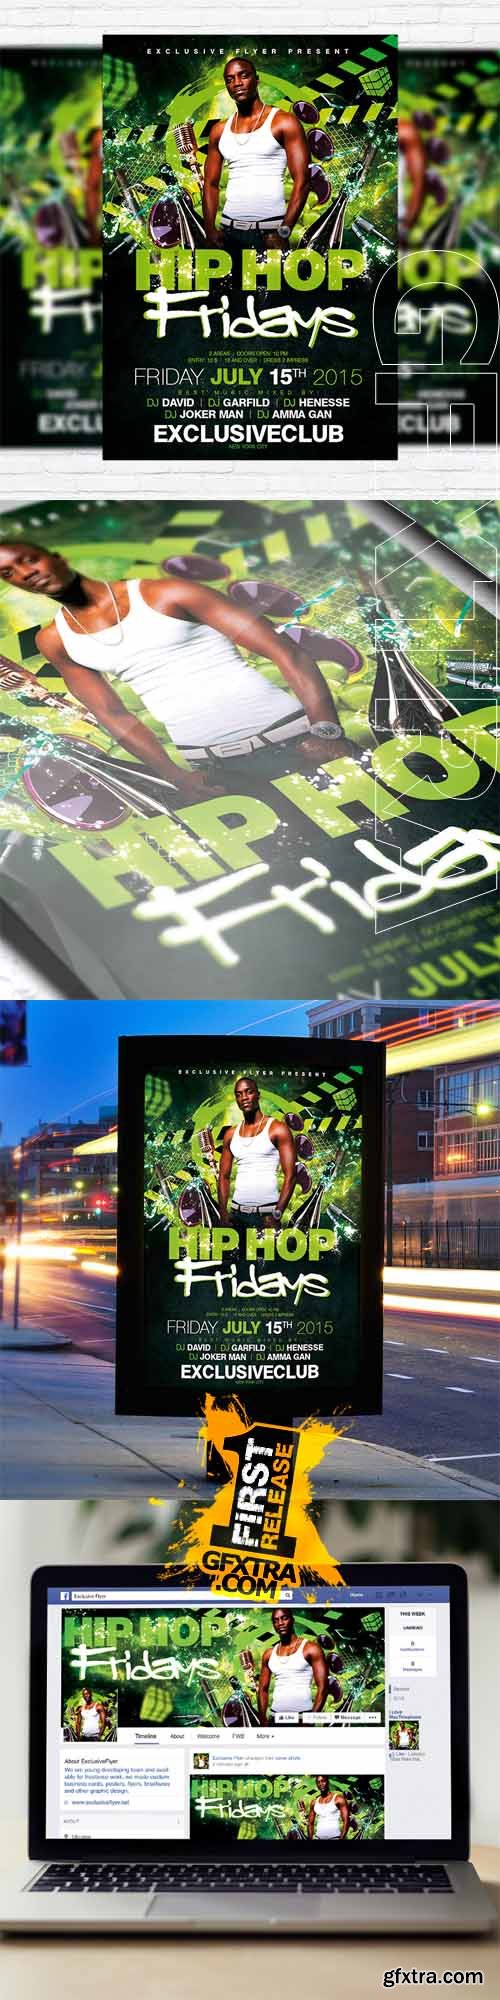 Hip Hop Fridays – Flyer Template + Facebook Cover